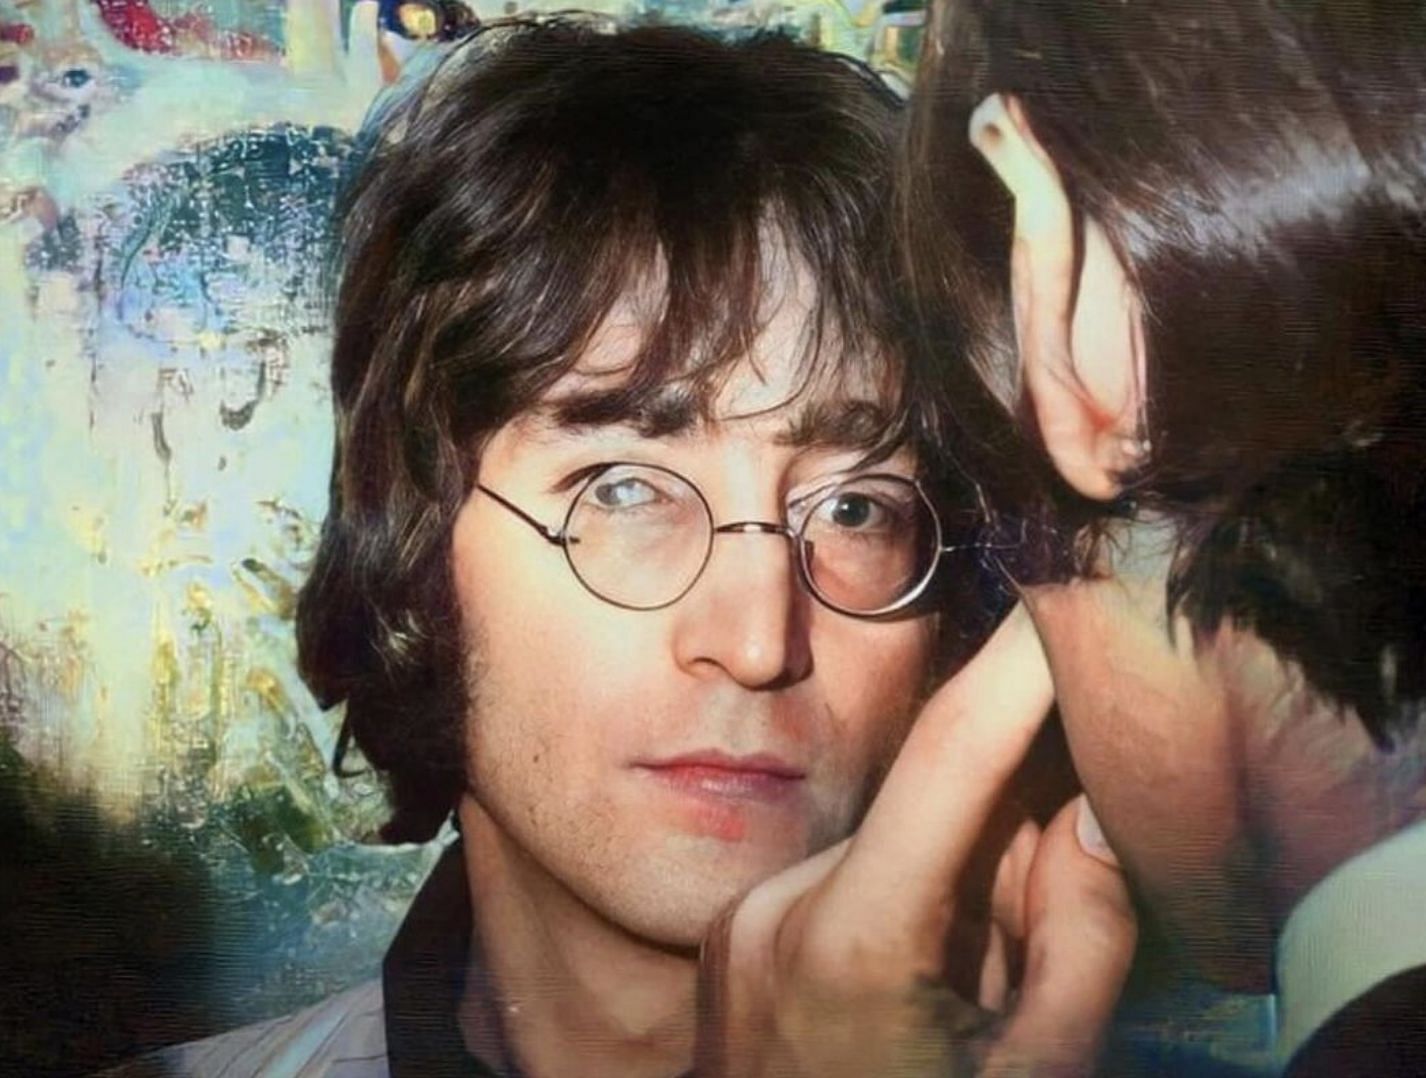 A still of The Beatles star (Image via Instagram/@johnlennon)